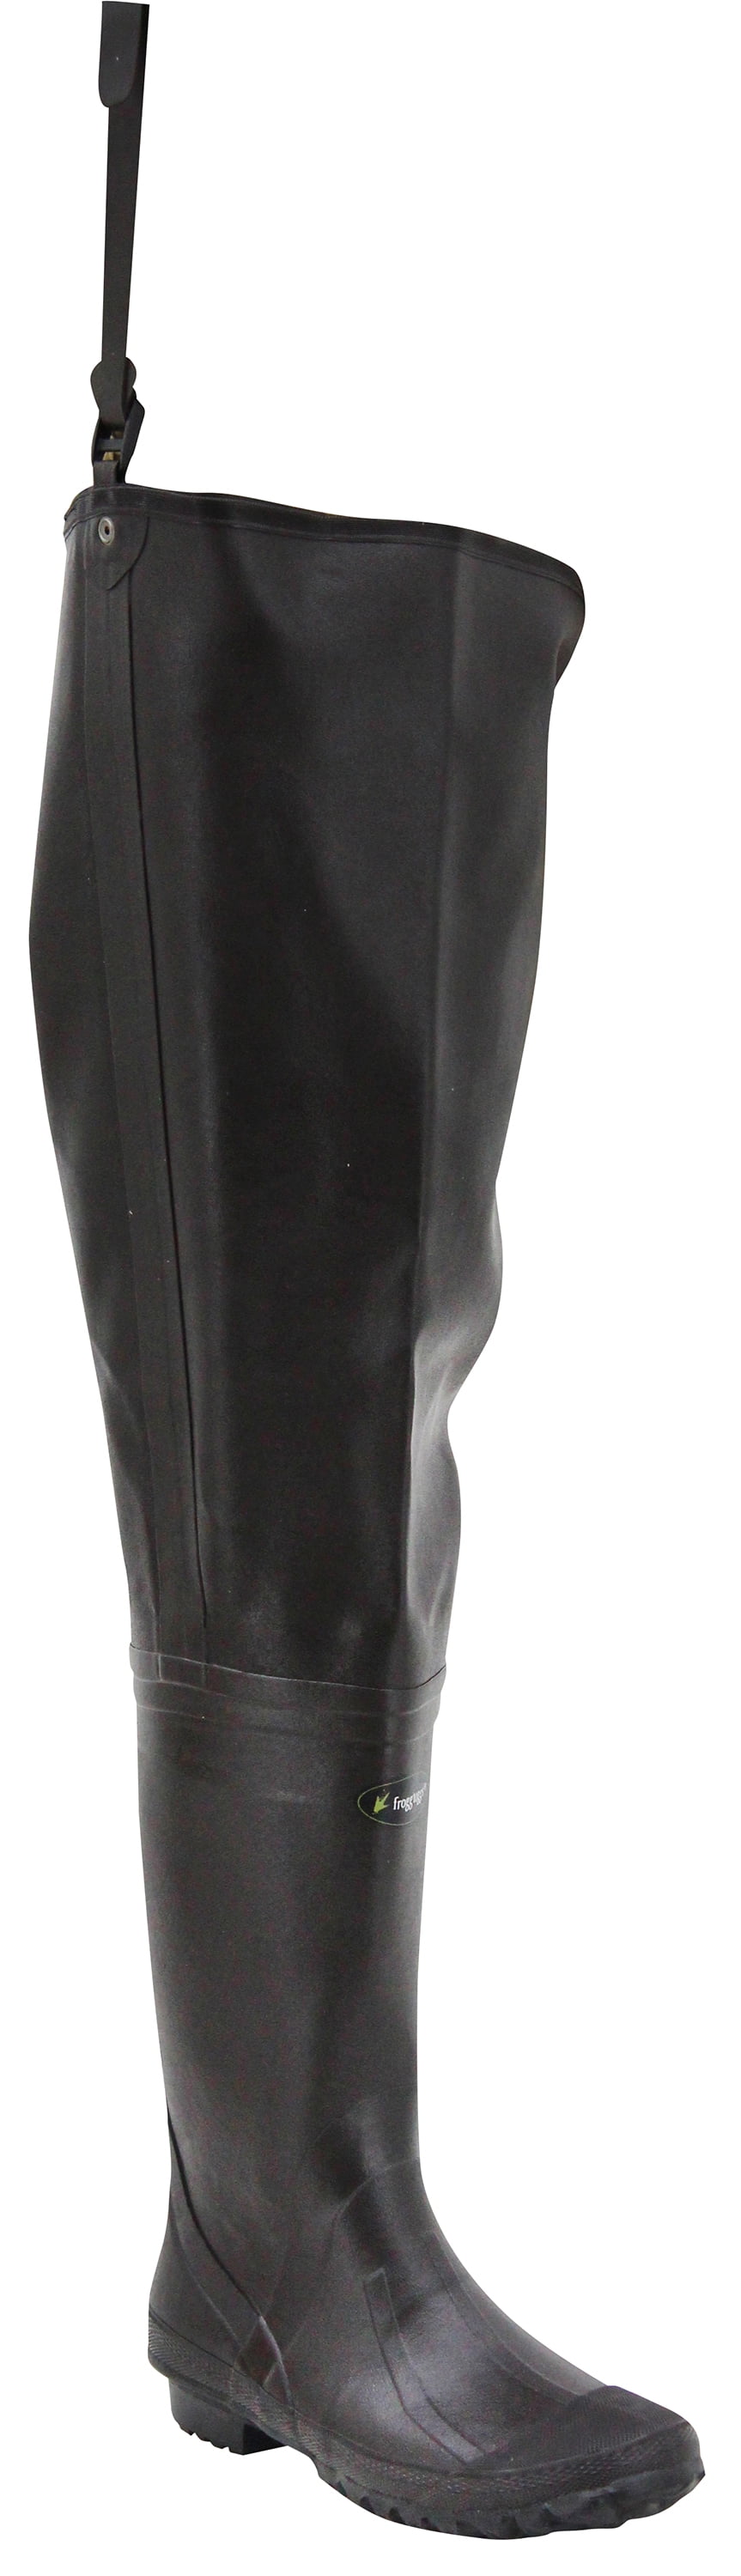 Allen 11762 Black River Bootfoot Hip Waders Size 12 for sale online 